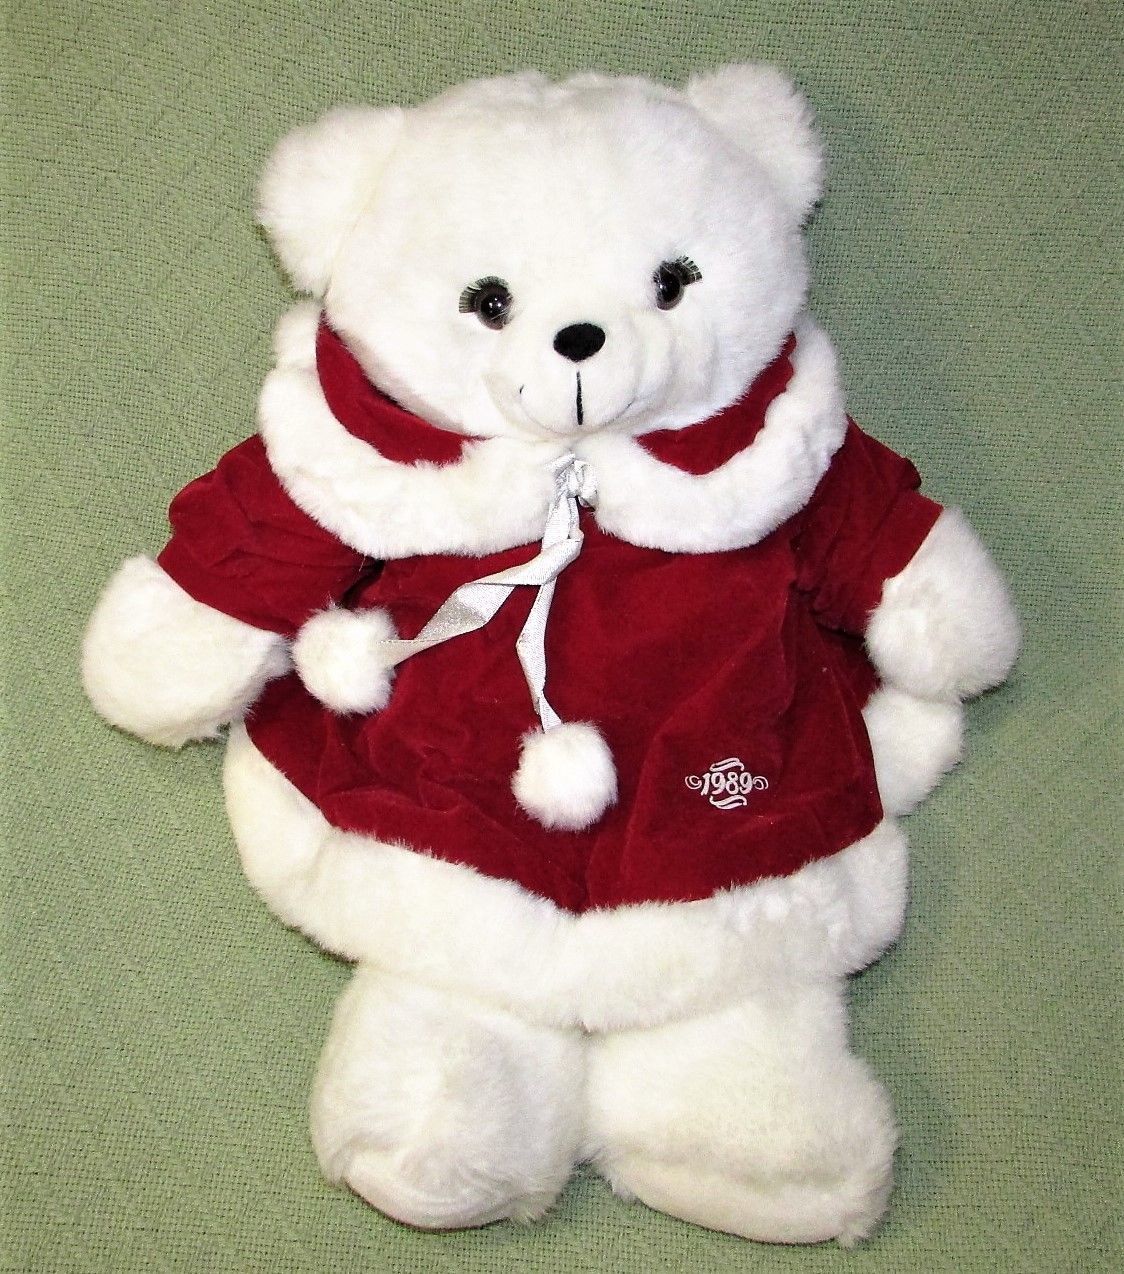 big teddy bear kmart